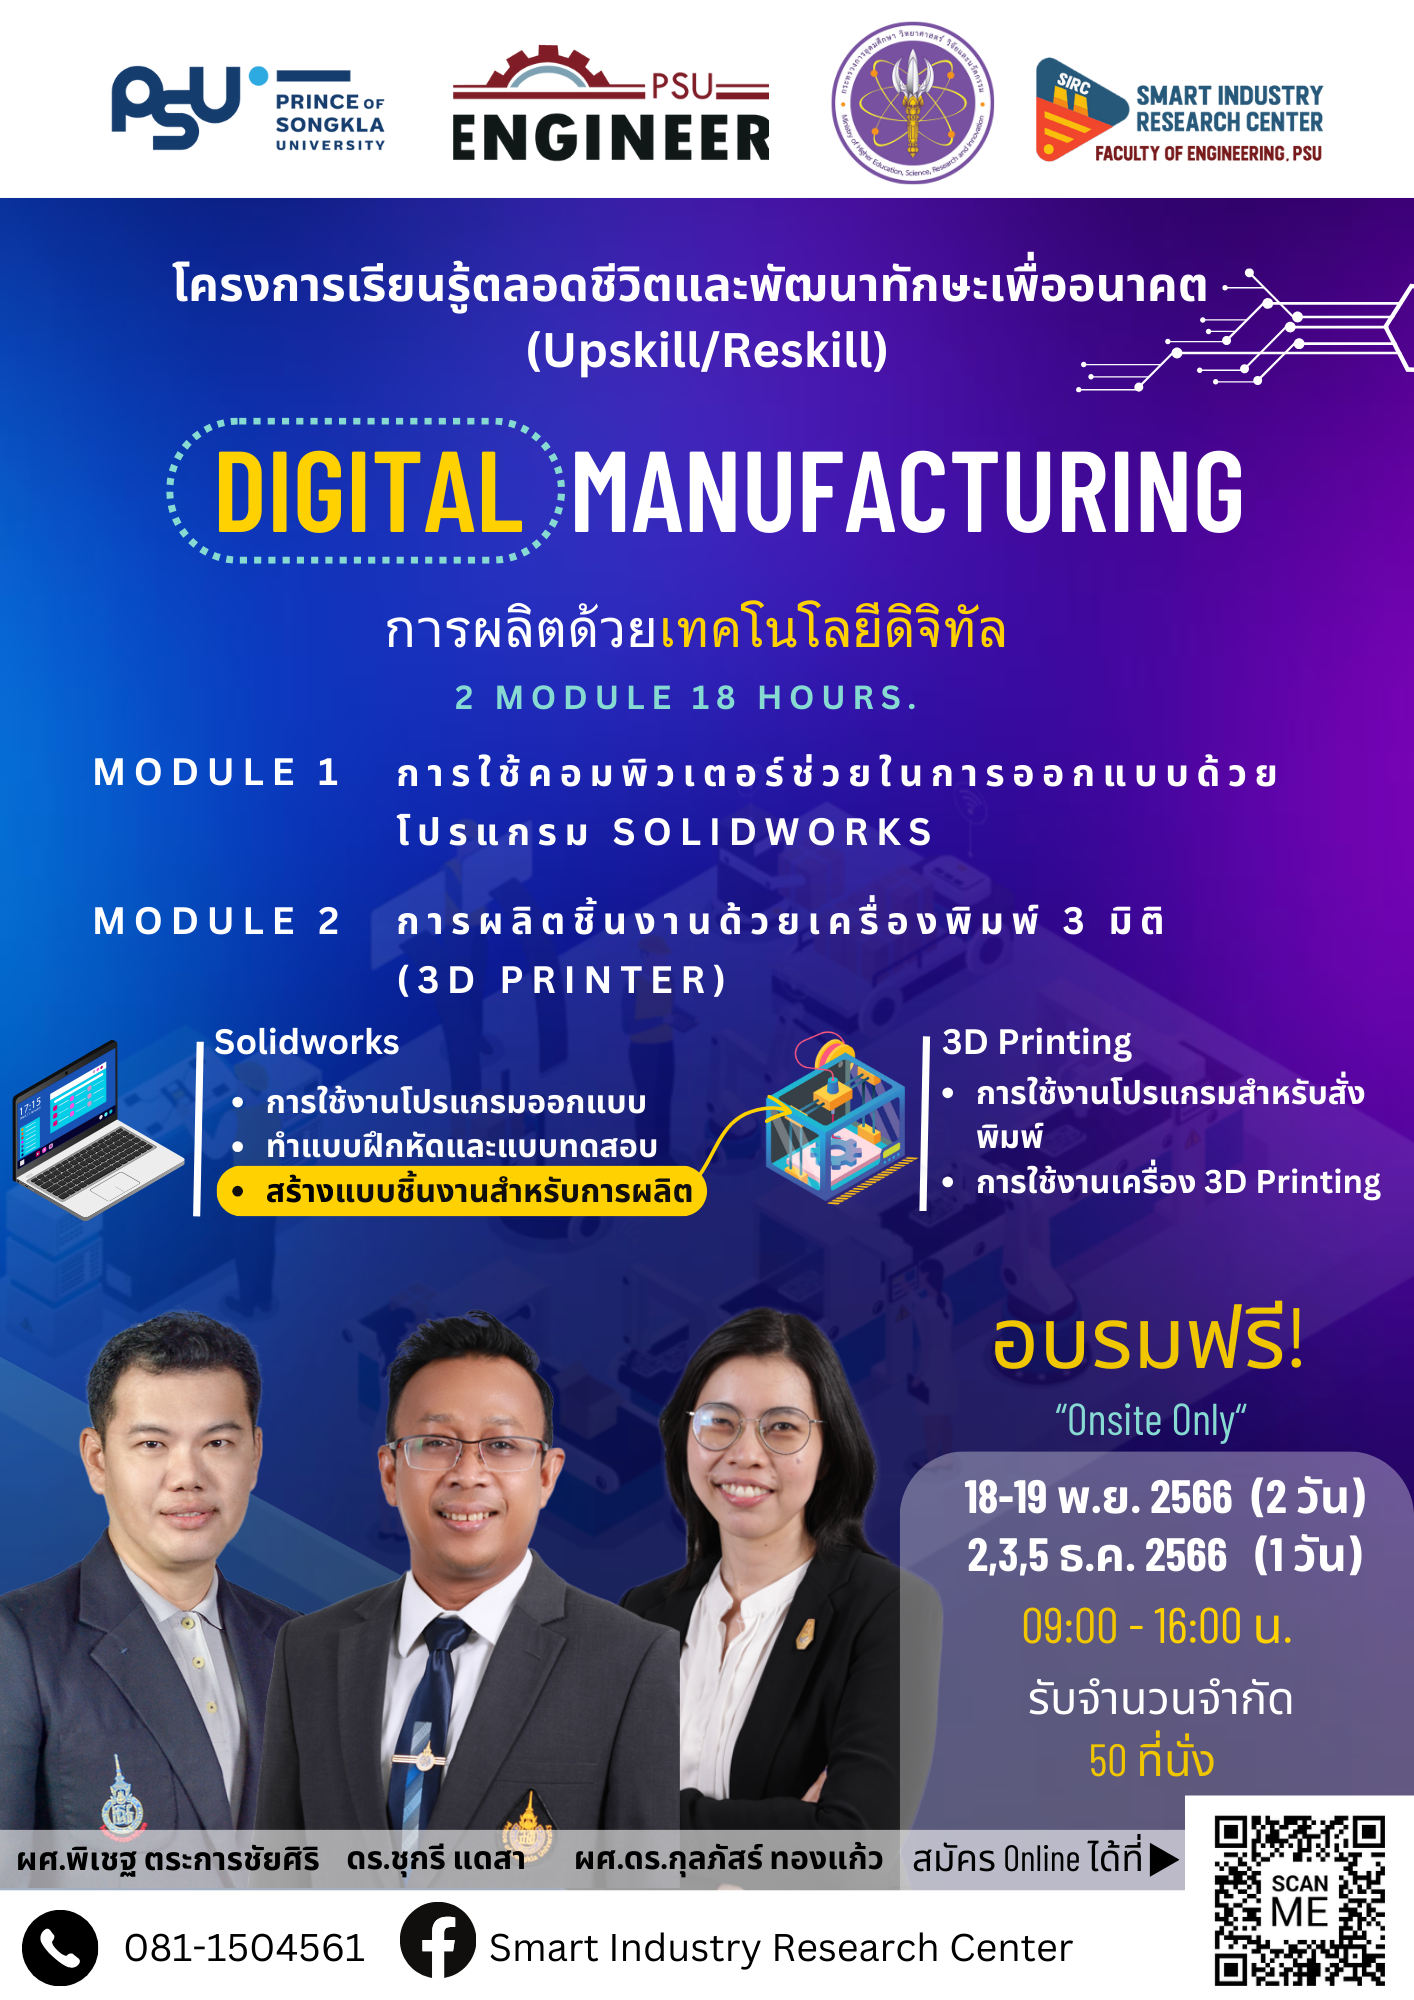 Digital manufacturing